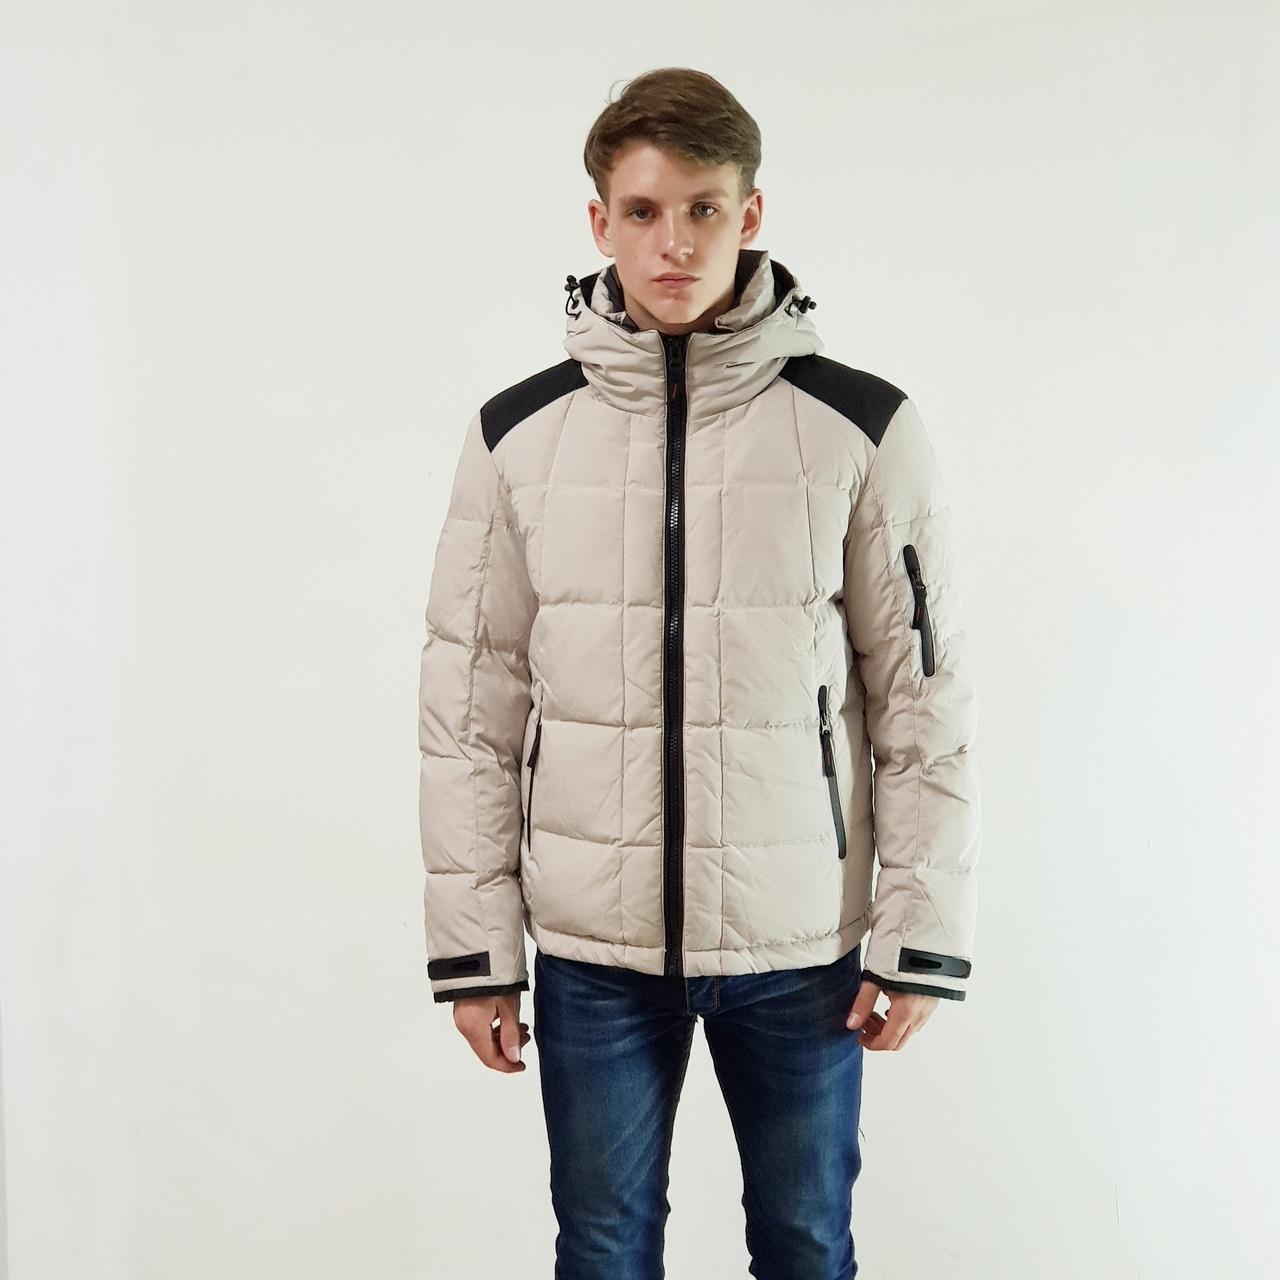 Куртка мужская зимняя Snowimage с капюшоном 48 светло-серый 118А-9189